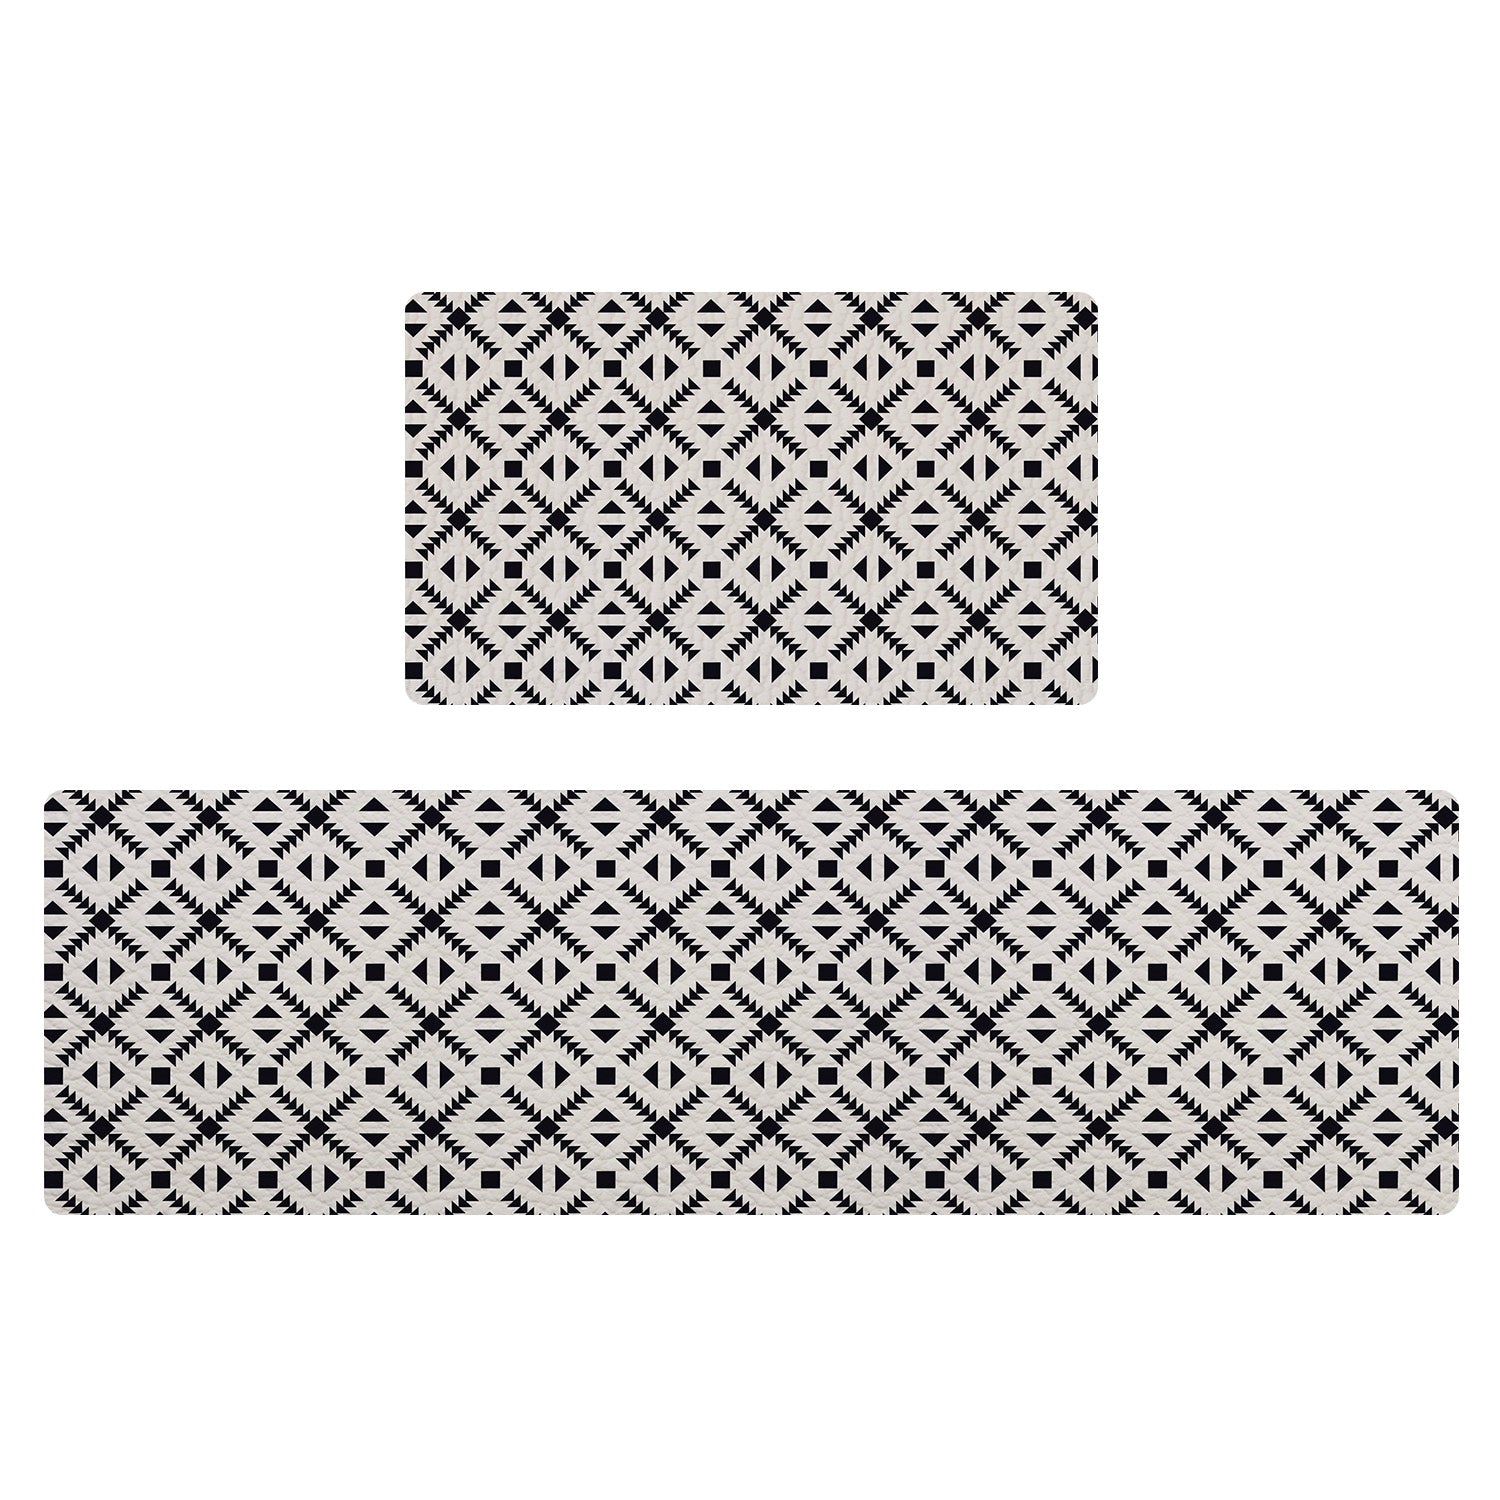 Feblilac Black and White Diamond Pattern PVC Leather Kitchen Mat